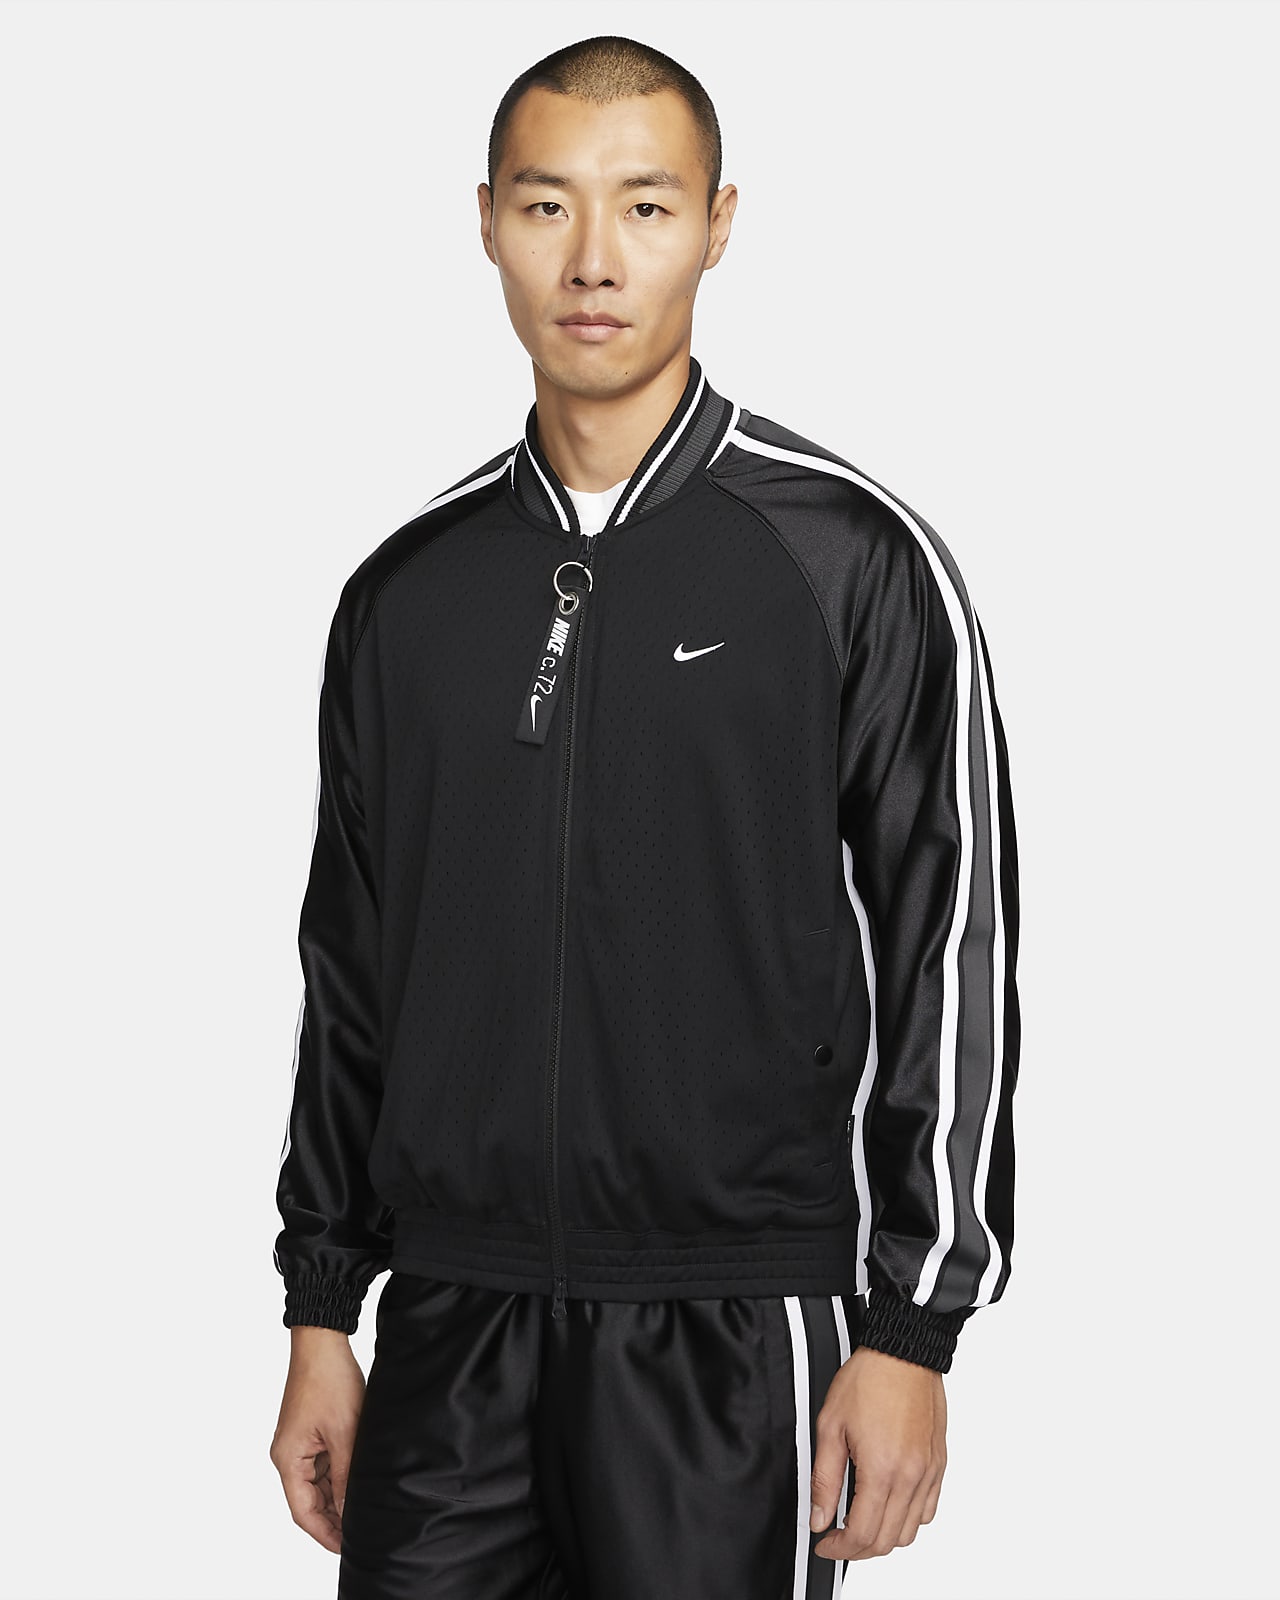 Nike Premium Basketball Jacket.